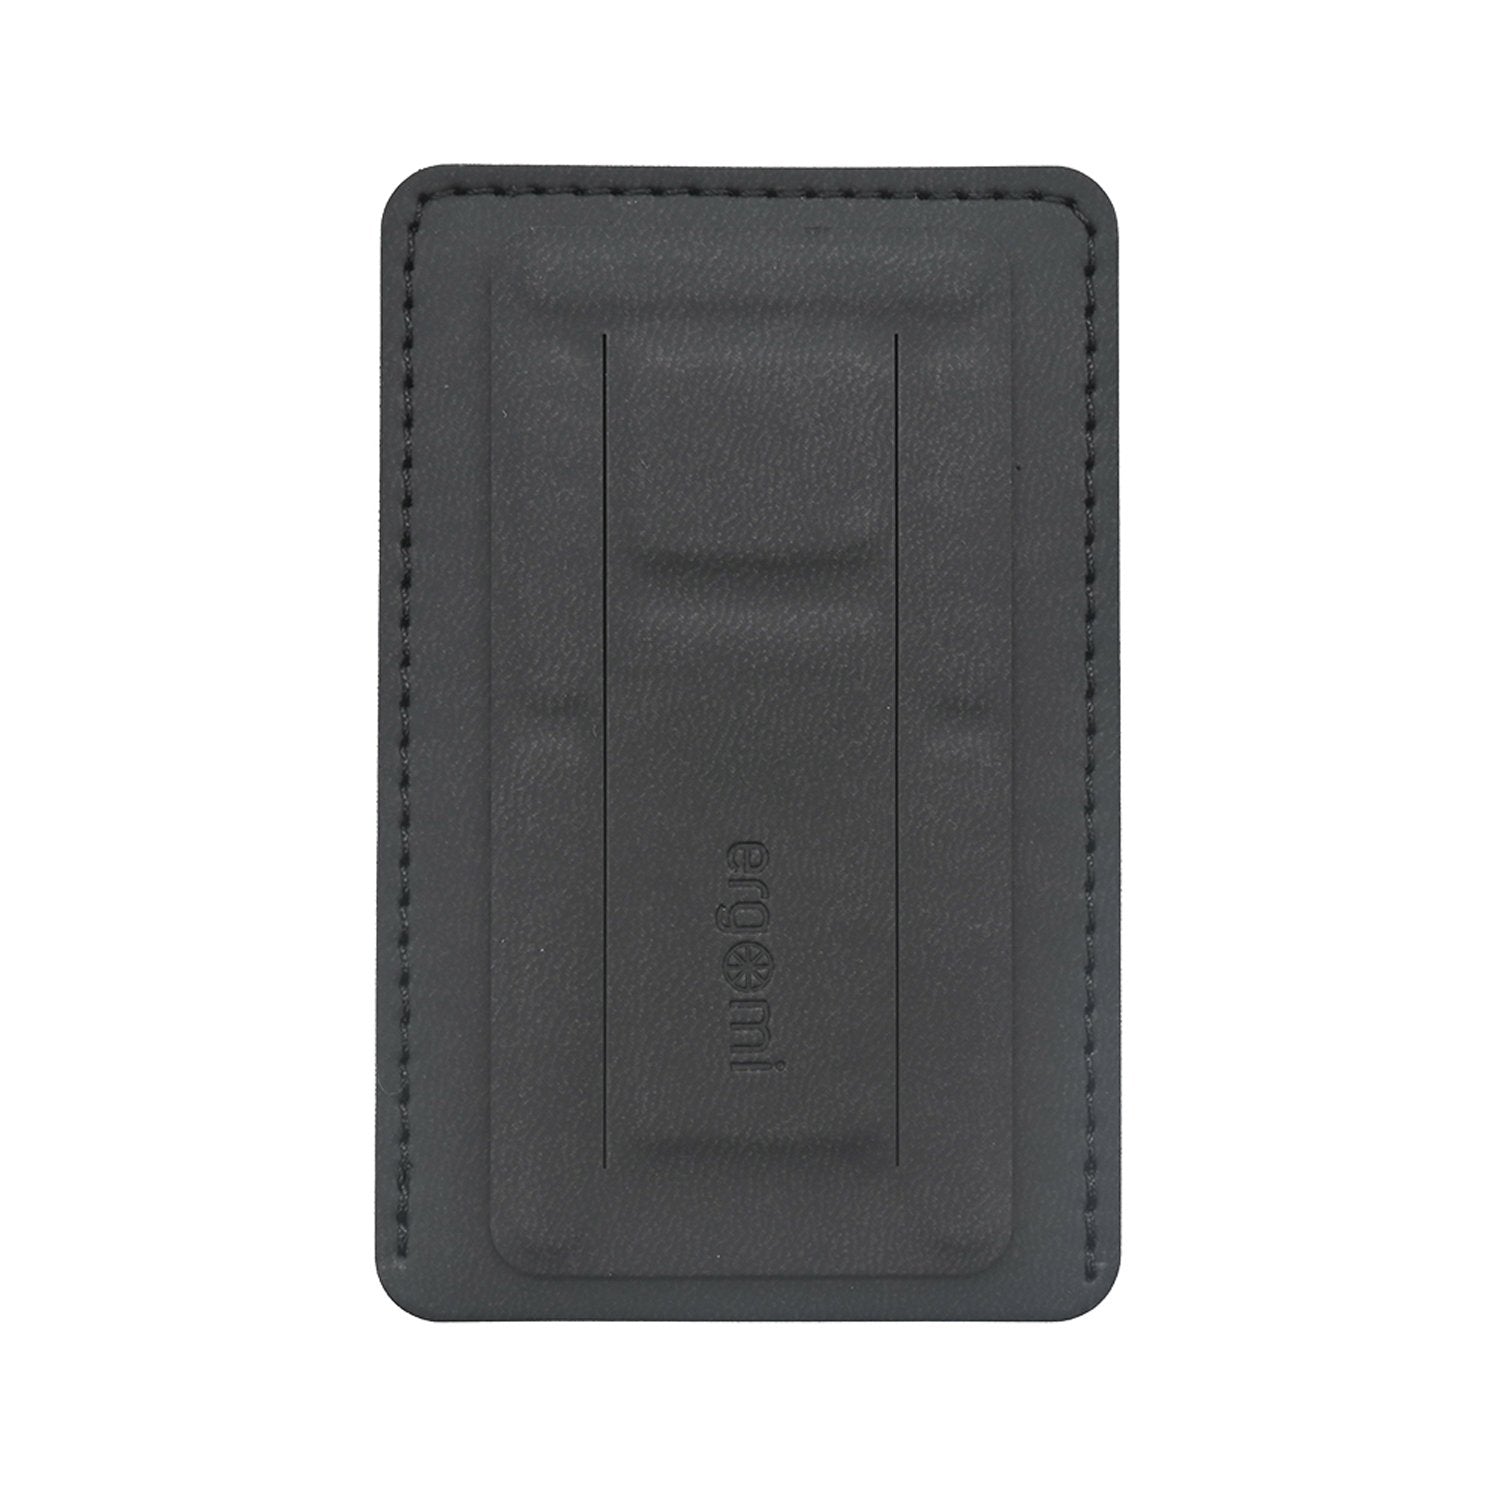 Ergomi Hercules Wallet Adhesive Cardholder Phone Stand, Black Default Ergomi Default 